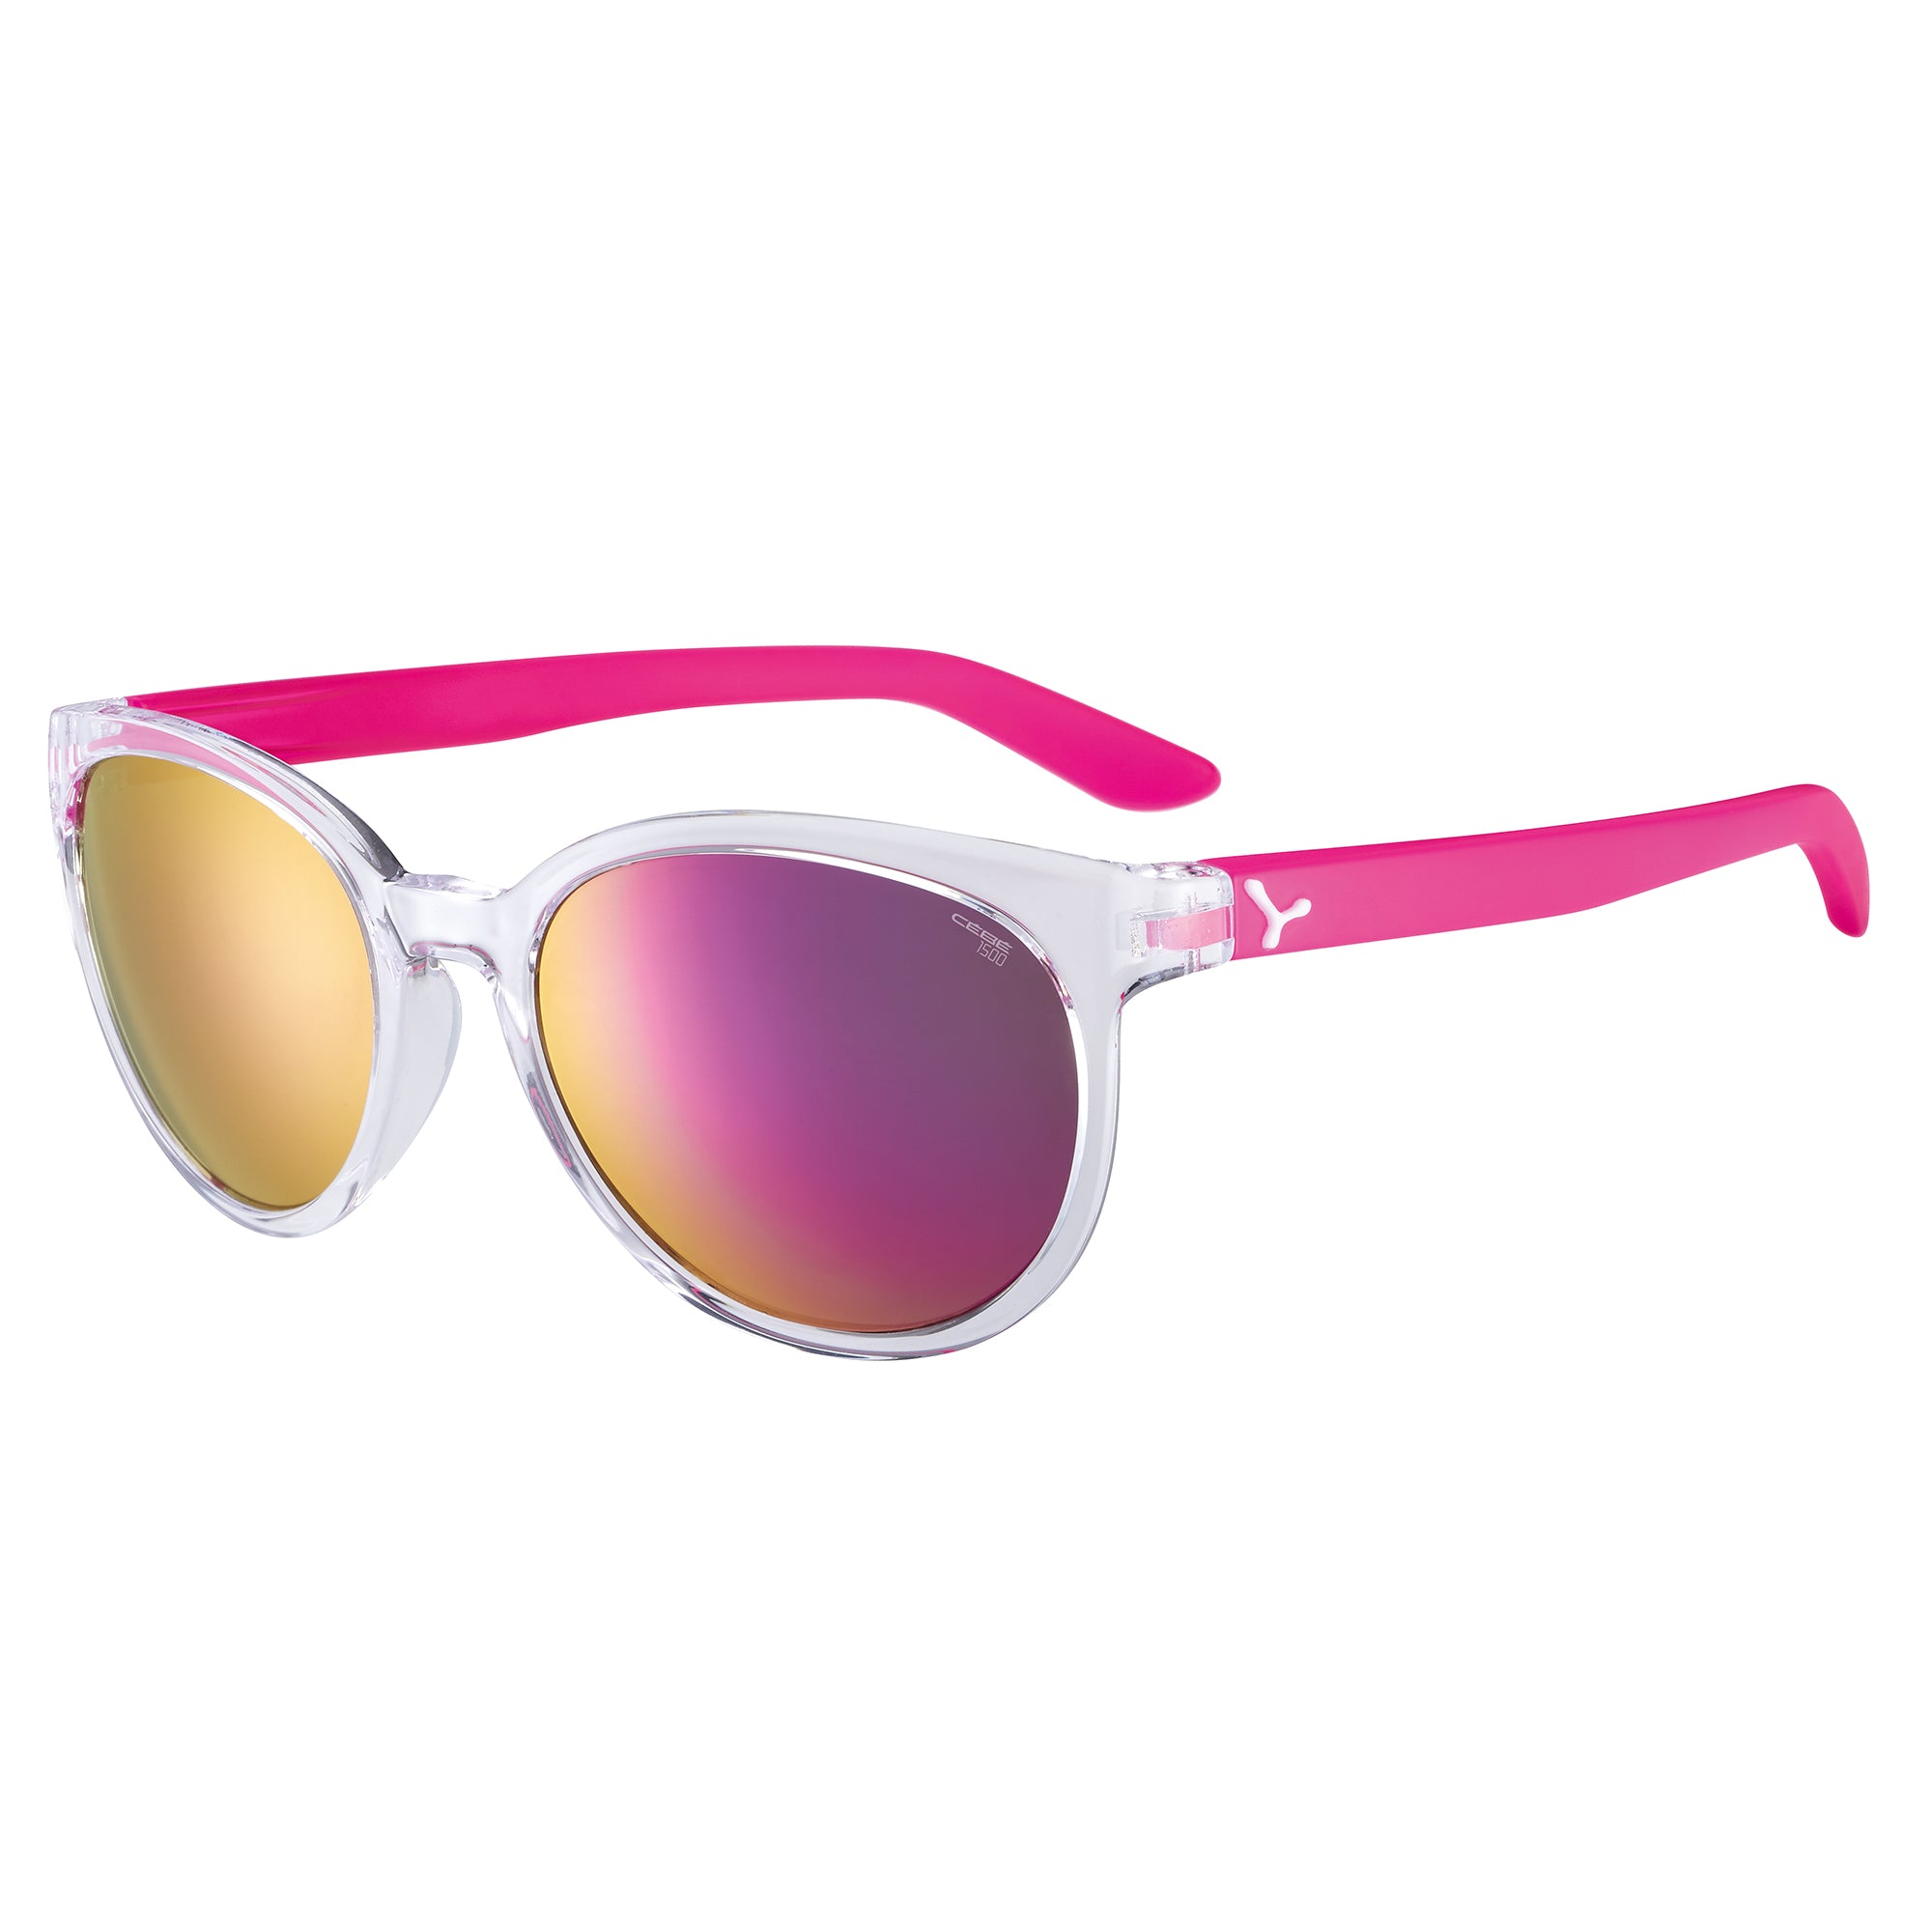 Cebe SUNRISE CBSUNRI1 Sunglasses - Shiny Translucent Pink